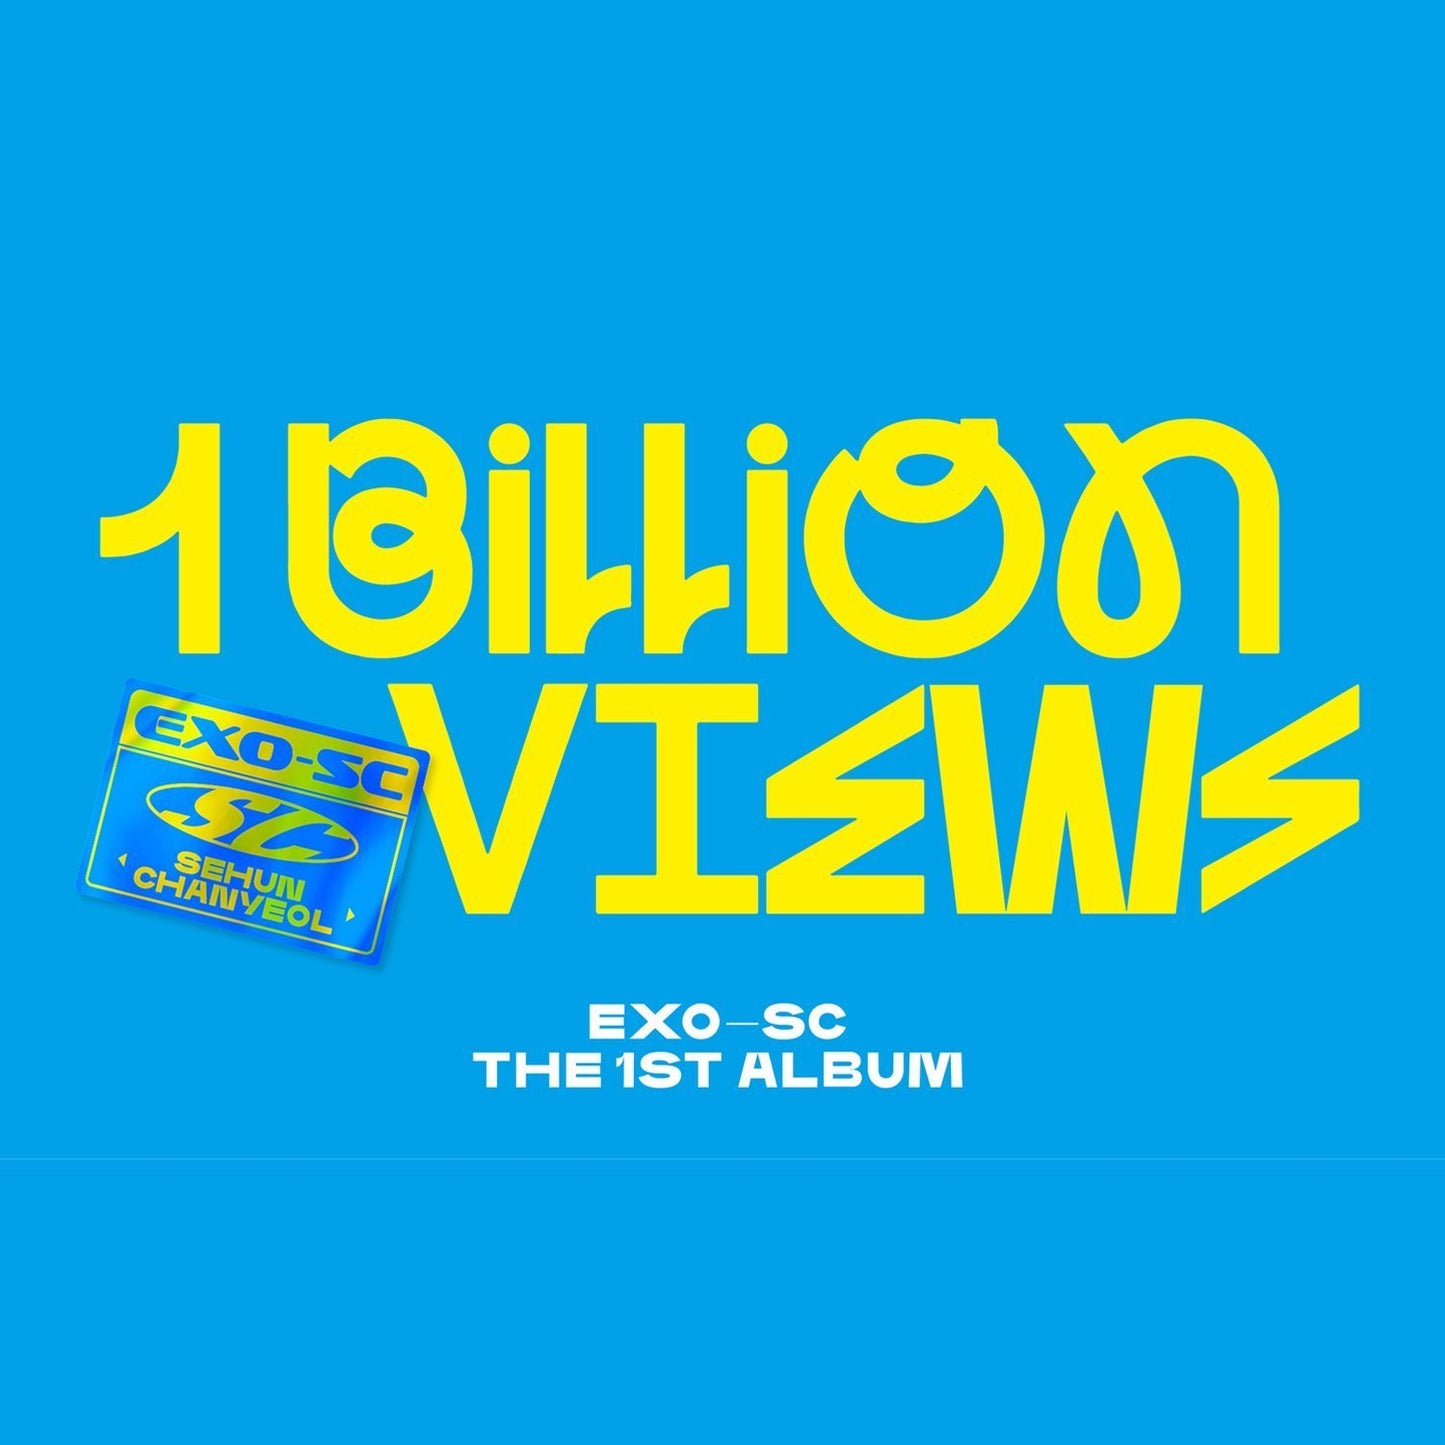 EXO-SC - Vol.1 [1 Billion Views]